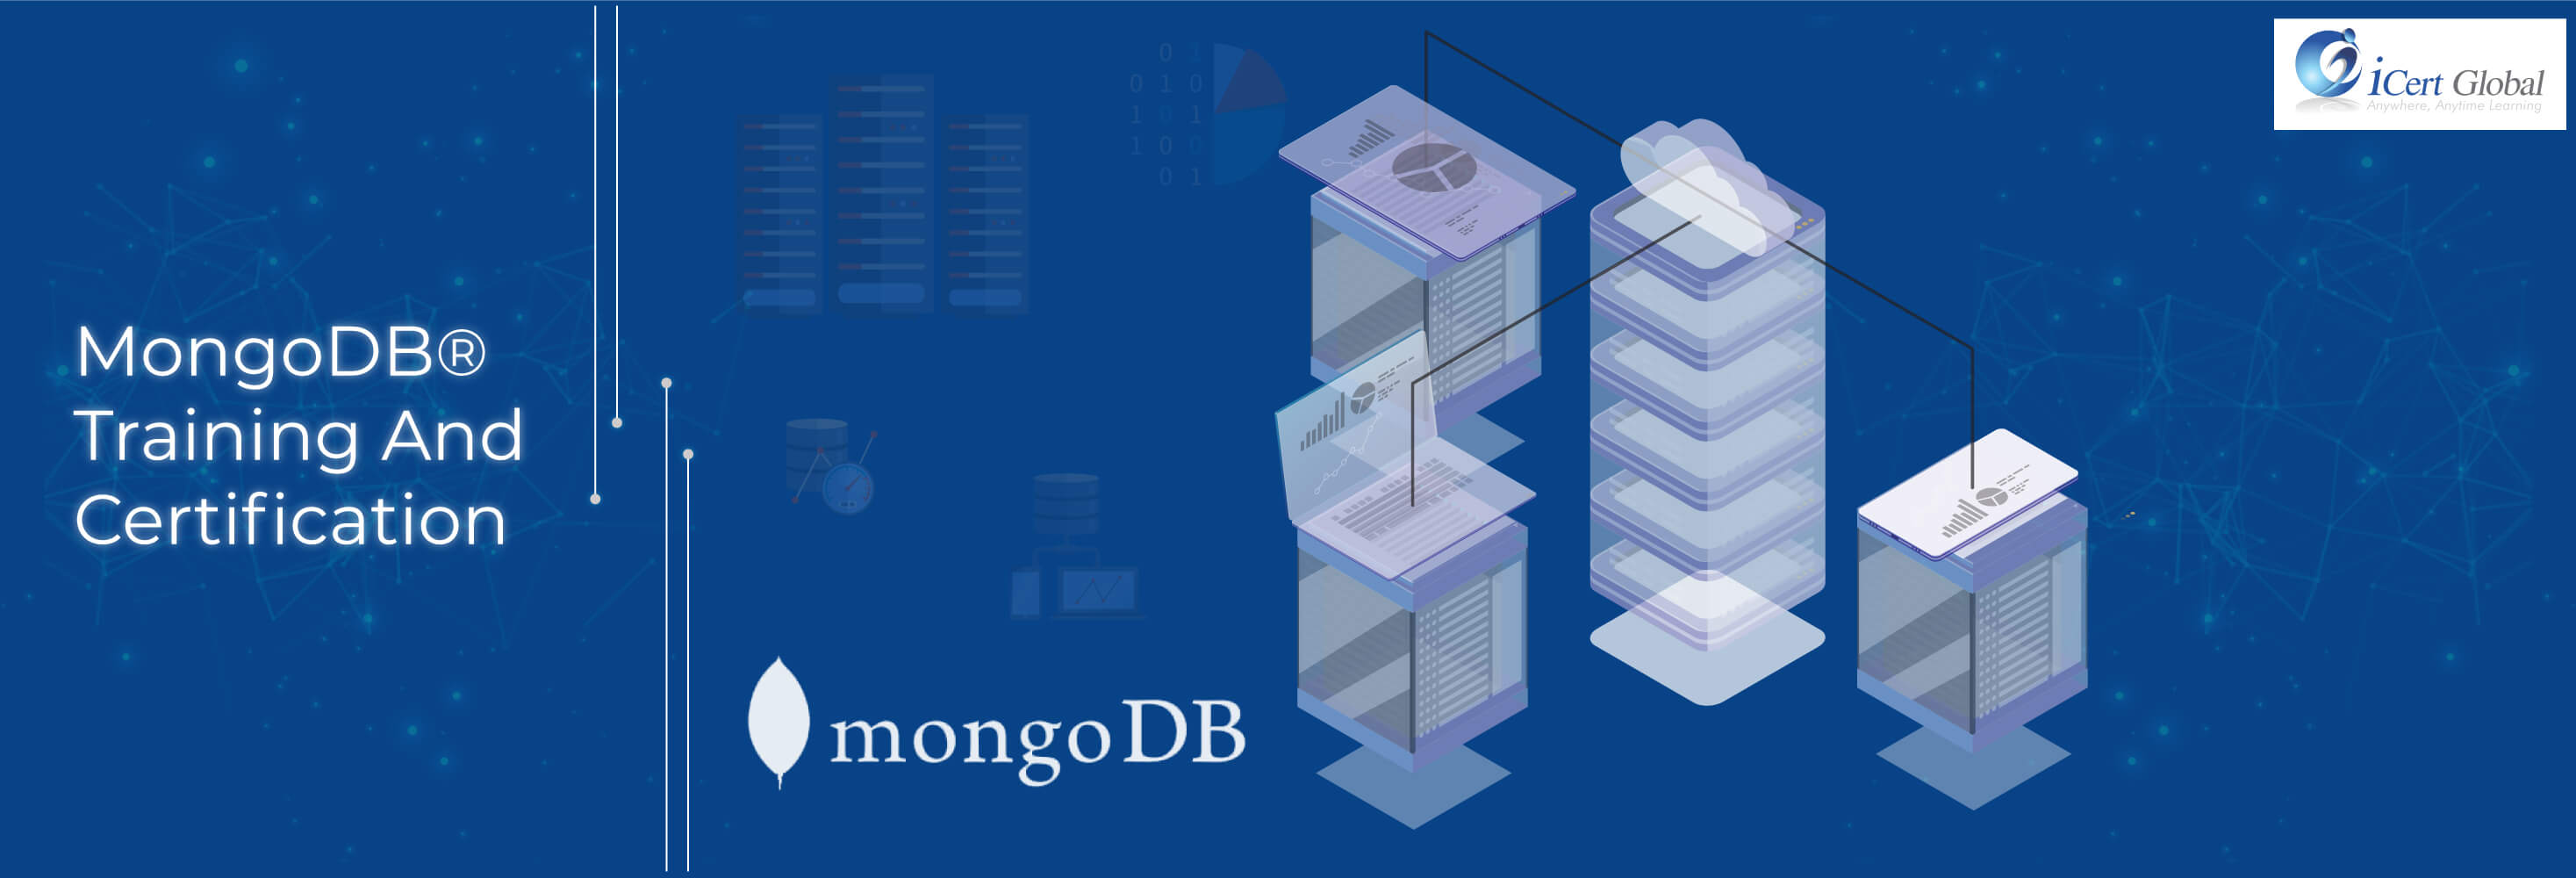 MongoDB Training and Certification